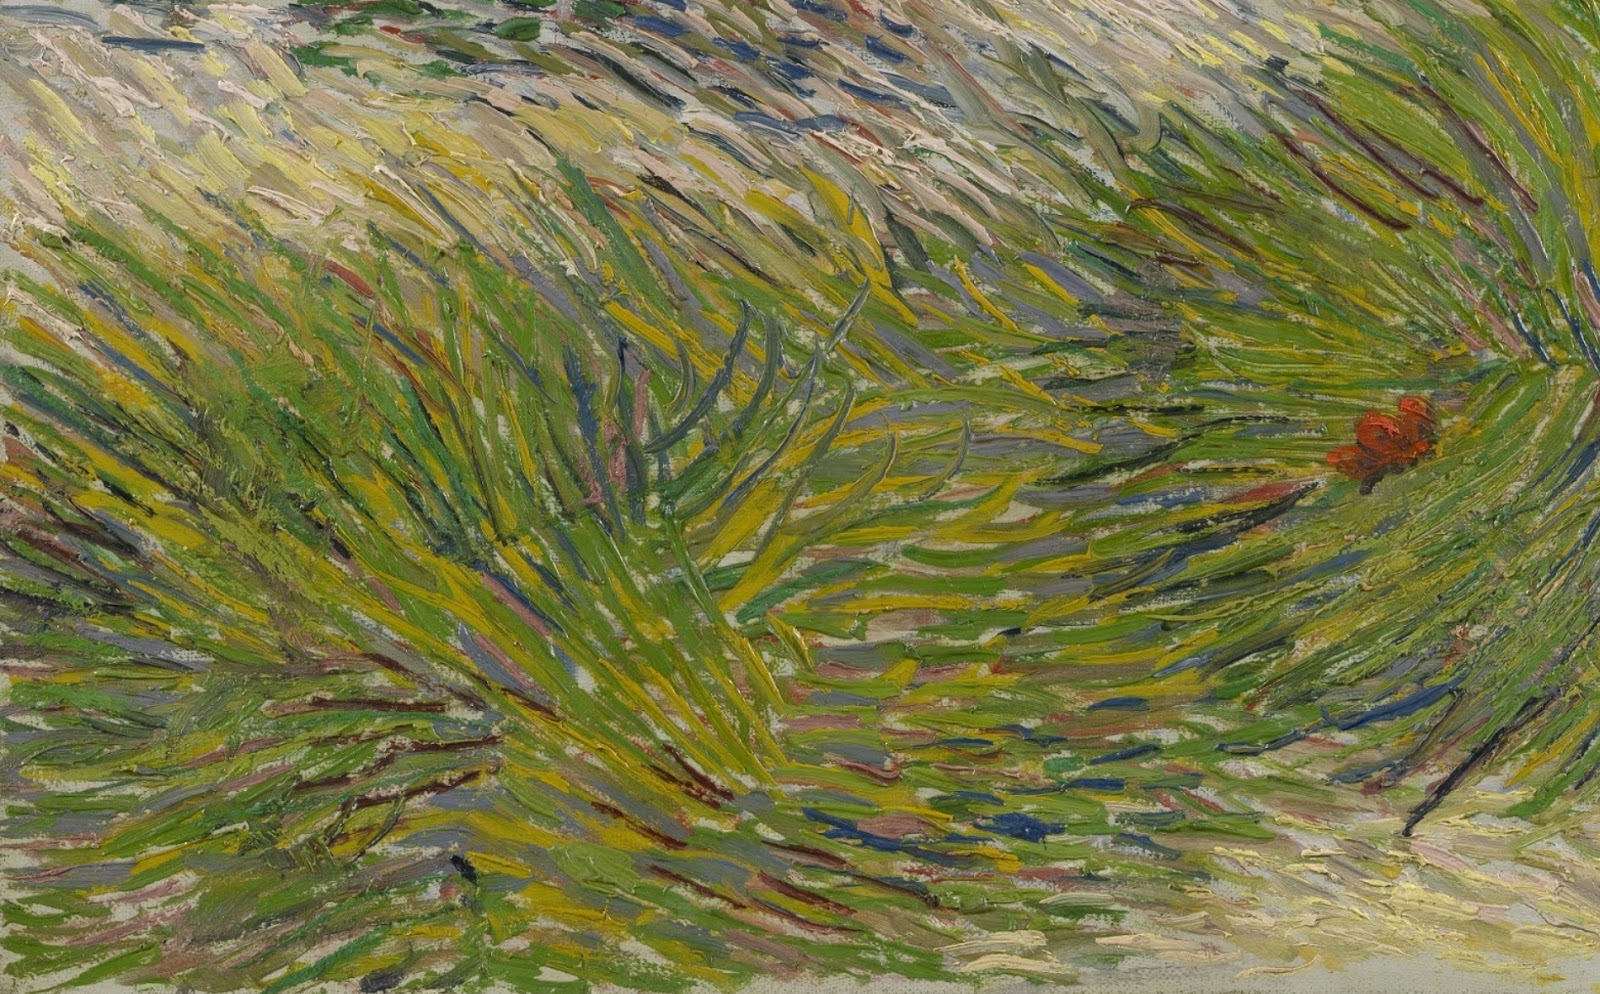 Vincent+Van+Gogh-1853-1890 (490).jpg